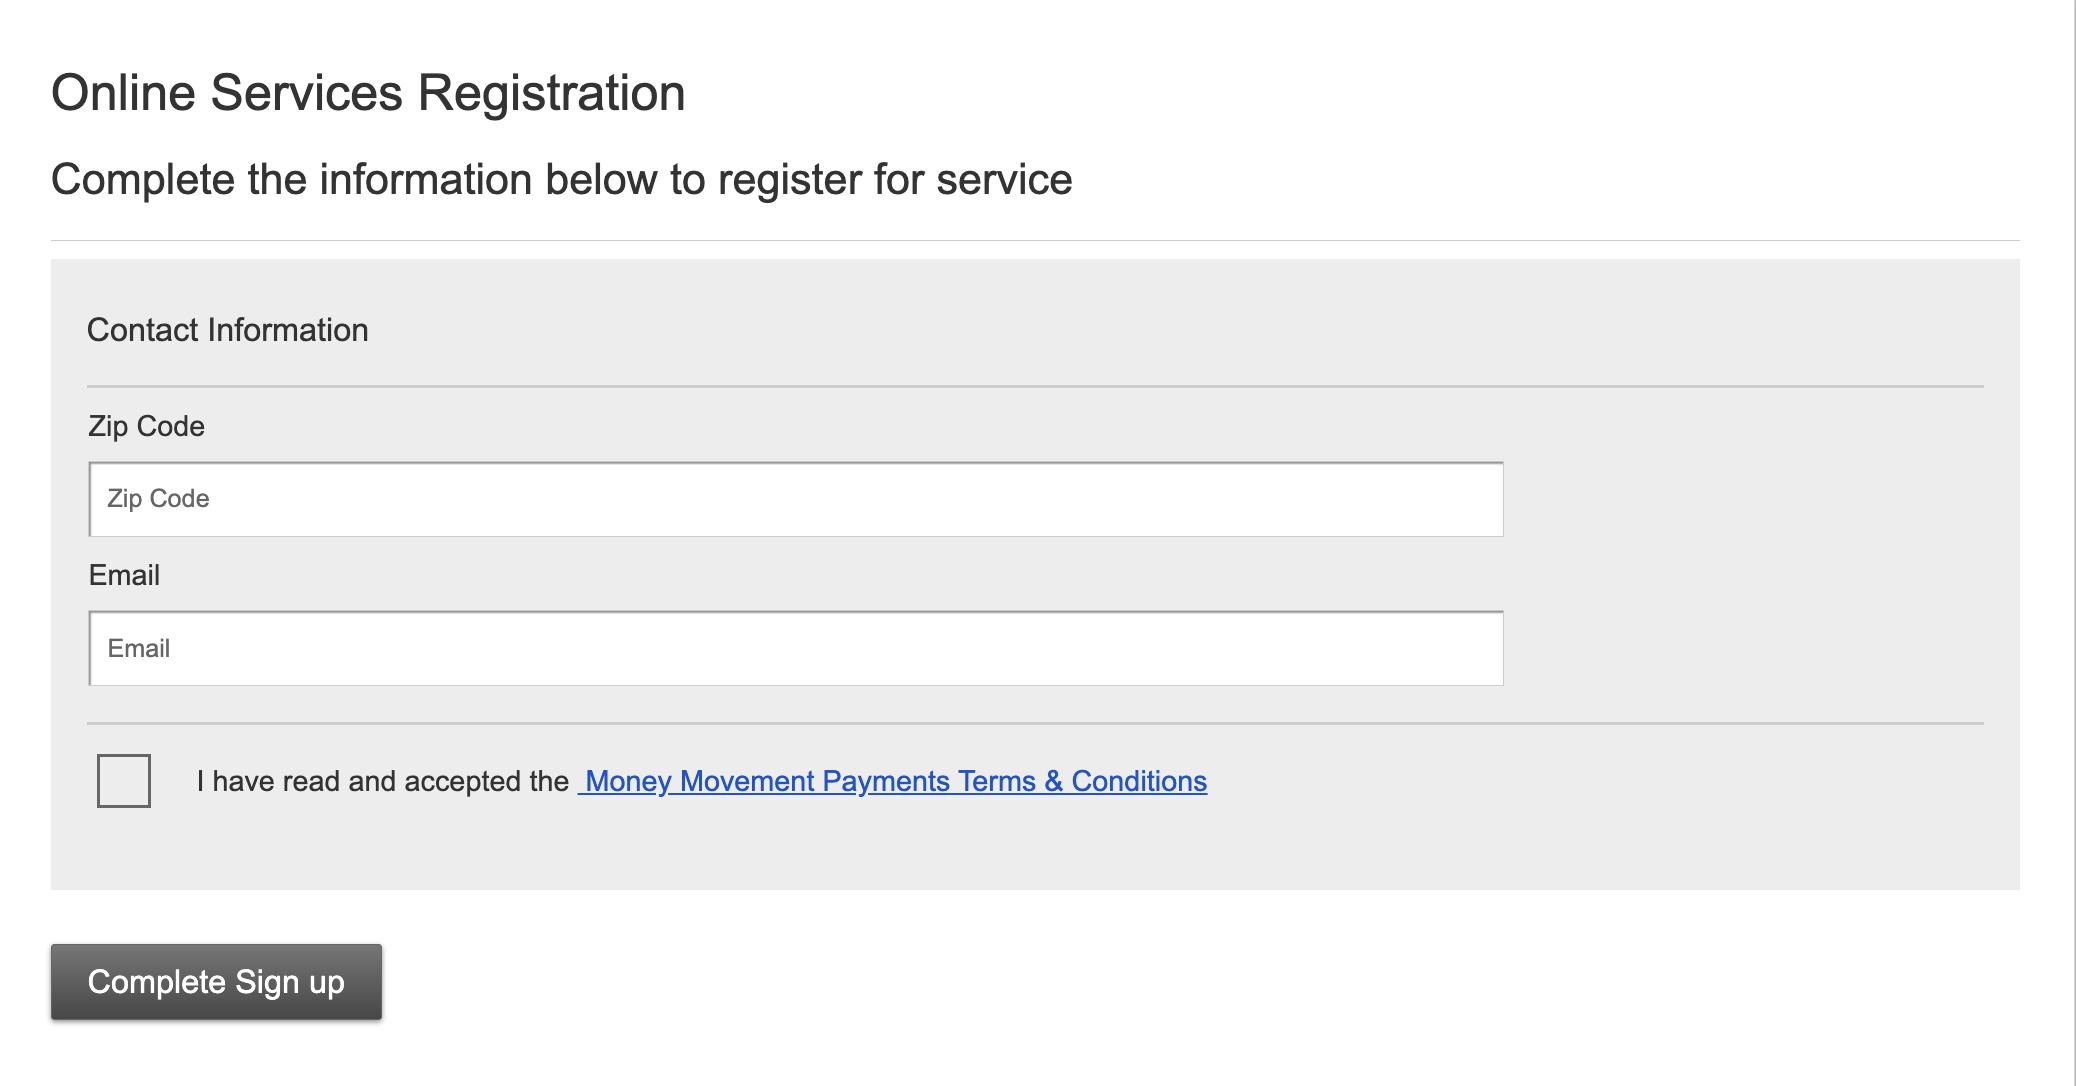 External Account Transfer registration